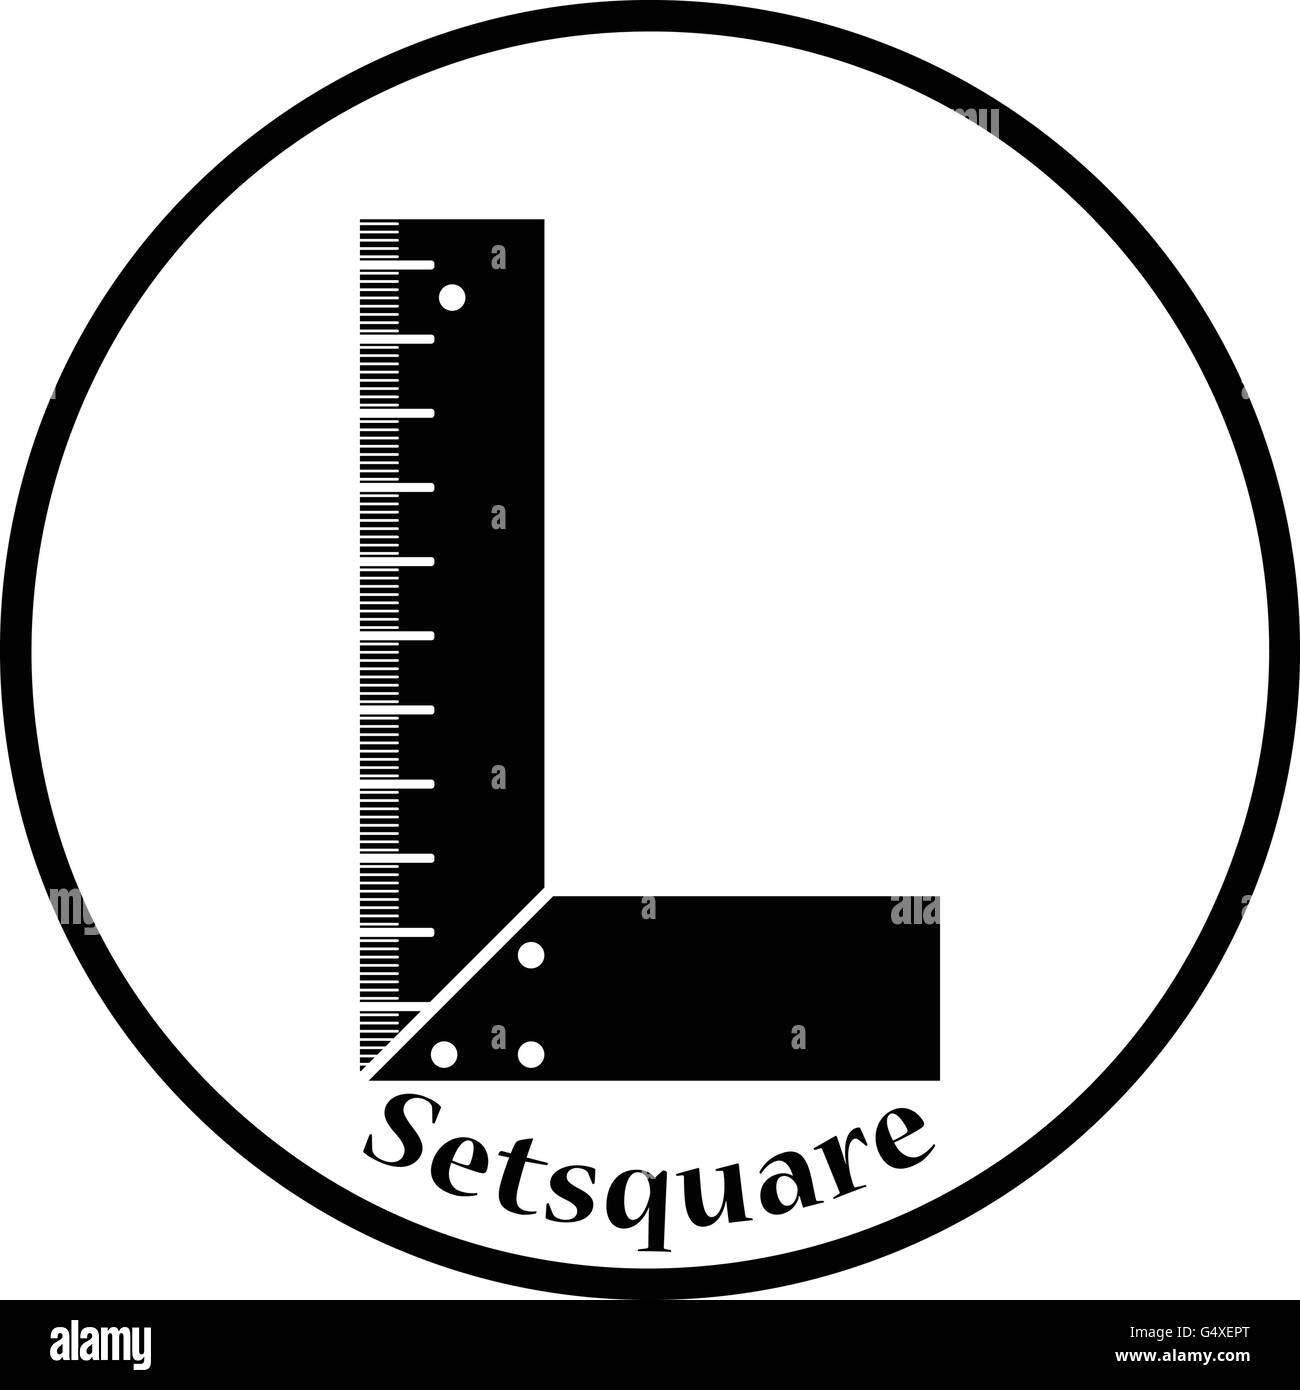 Icon of setsquare. Thin circle design. Vector illustration. Stock Vector